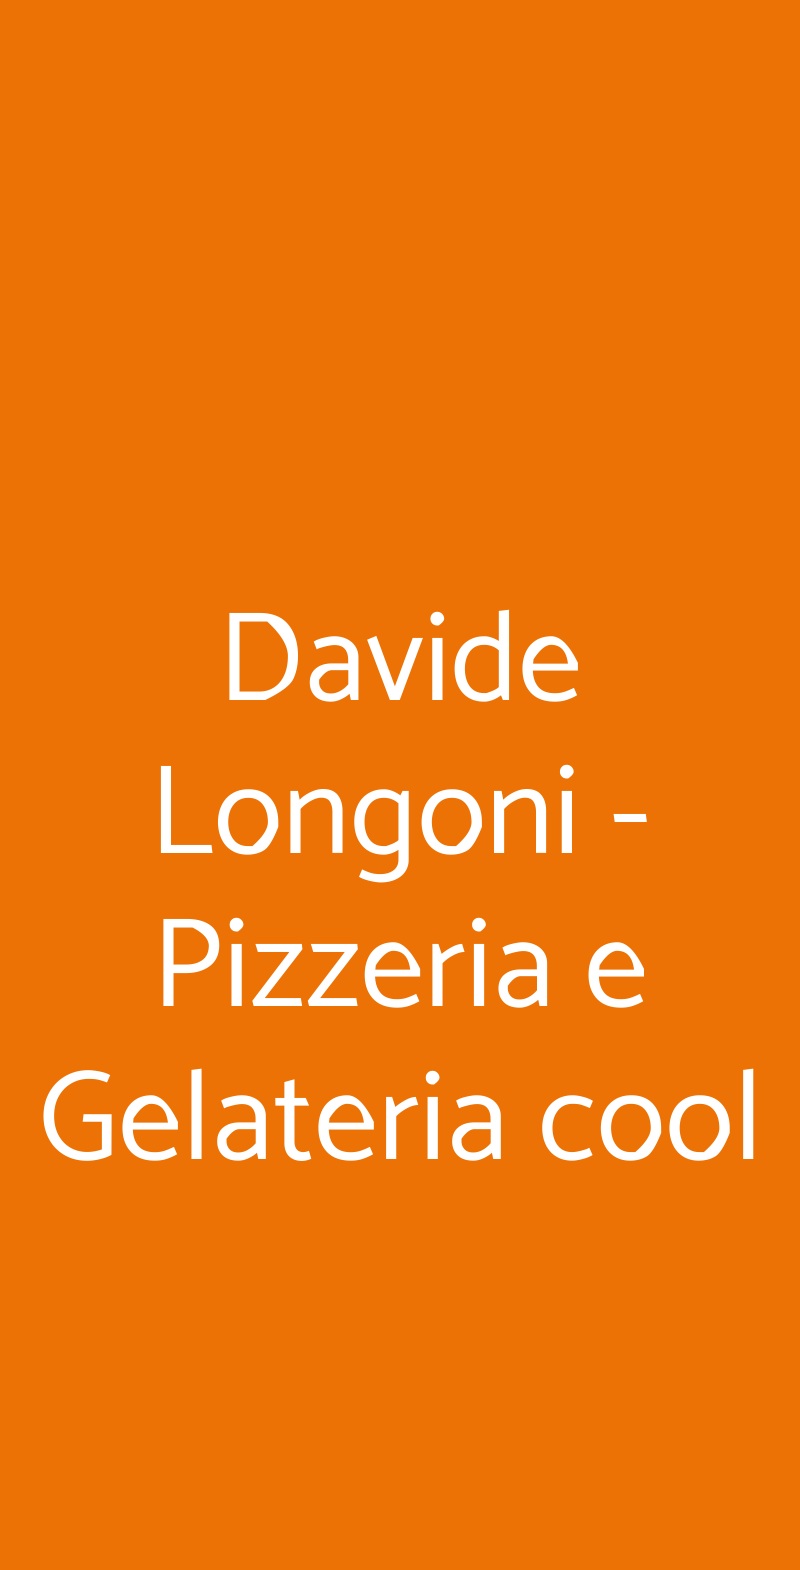 Davide Longoni - Pizzeria e Gelateria cool Milano menù 1 pagina